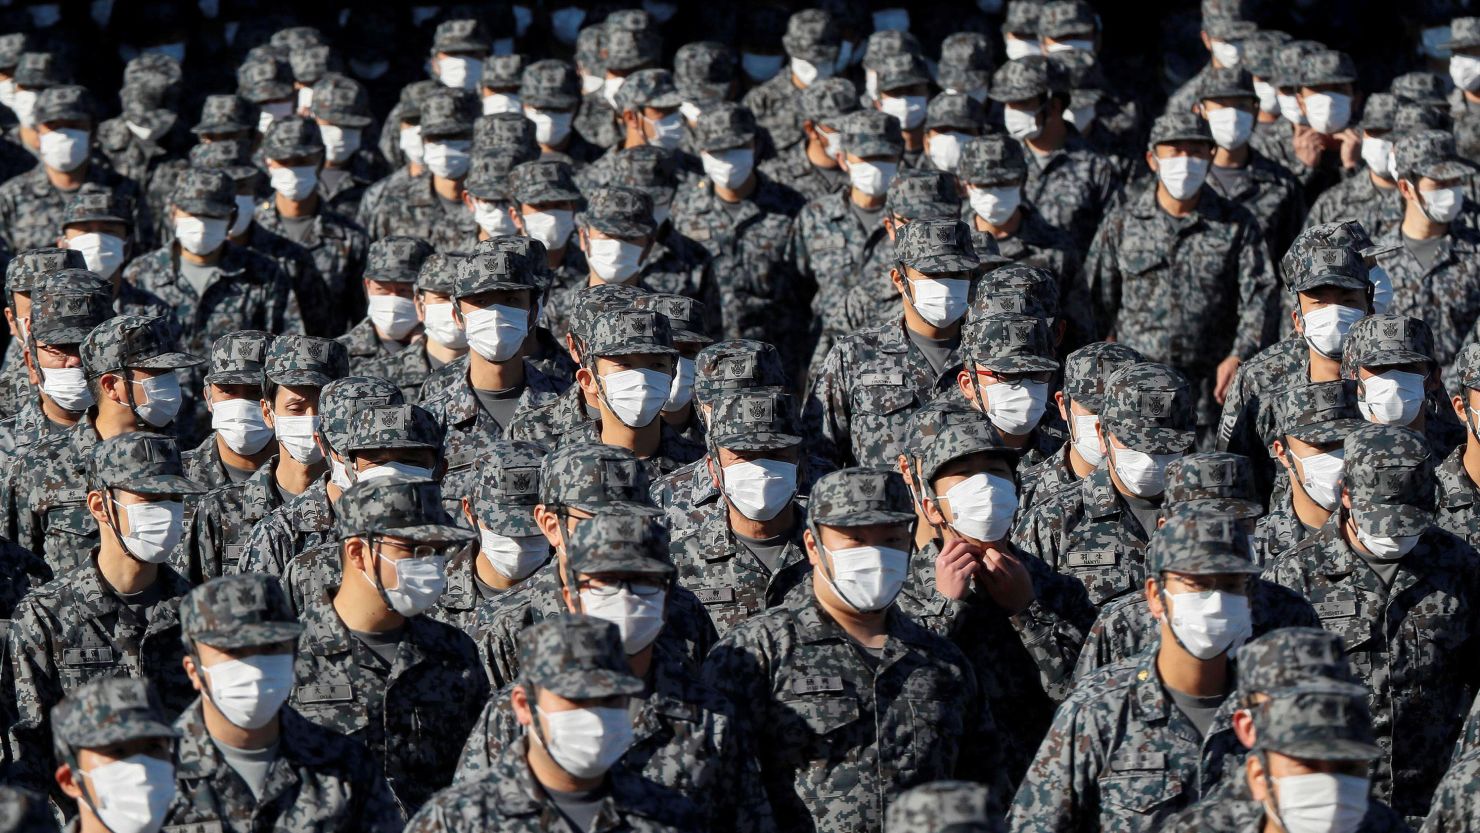 Japan's Air Self-Defense Force personnel prepare for a review by Japanese Prime Minister Yoshihide Suga at Iruma Air Base in Sayama, Saitama Prefecture, Japan on November 28, 2020. 